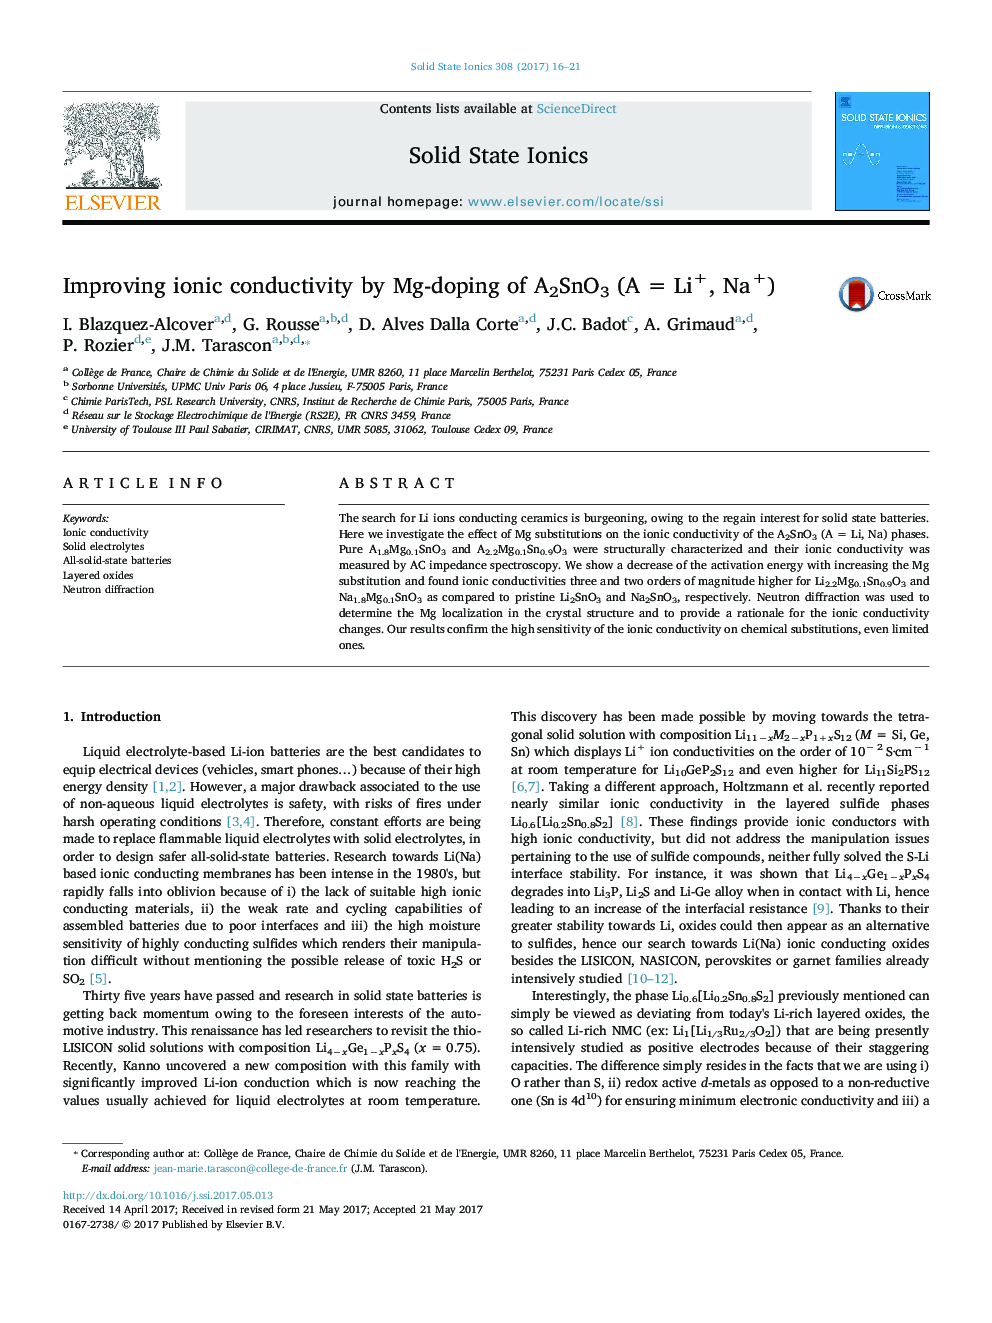 Improving ionic conductivity by Mg-doping of A2SnO3 (AÂ =Â Li+, Na+)